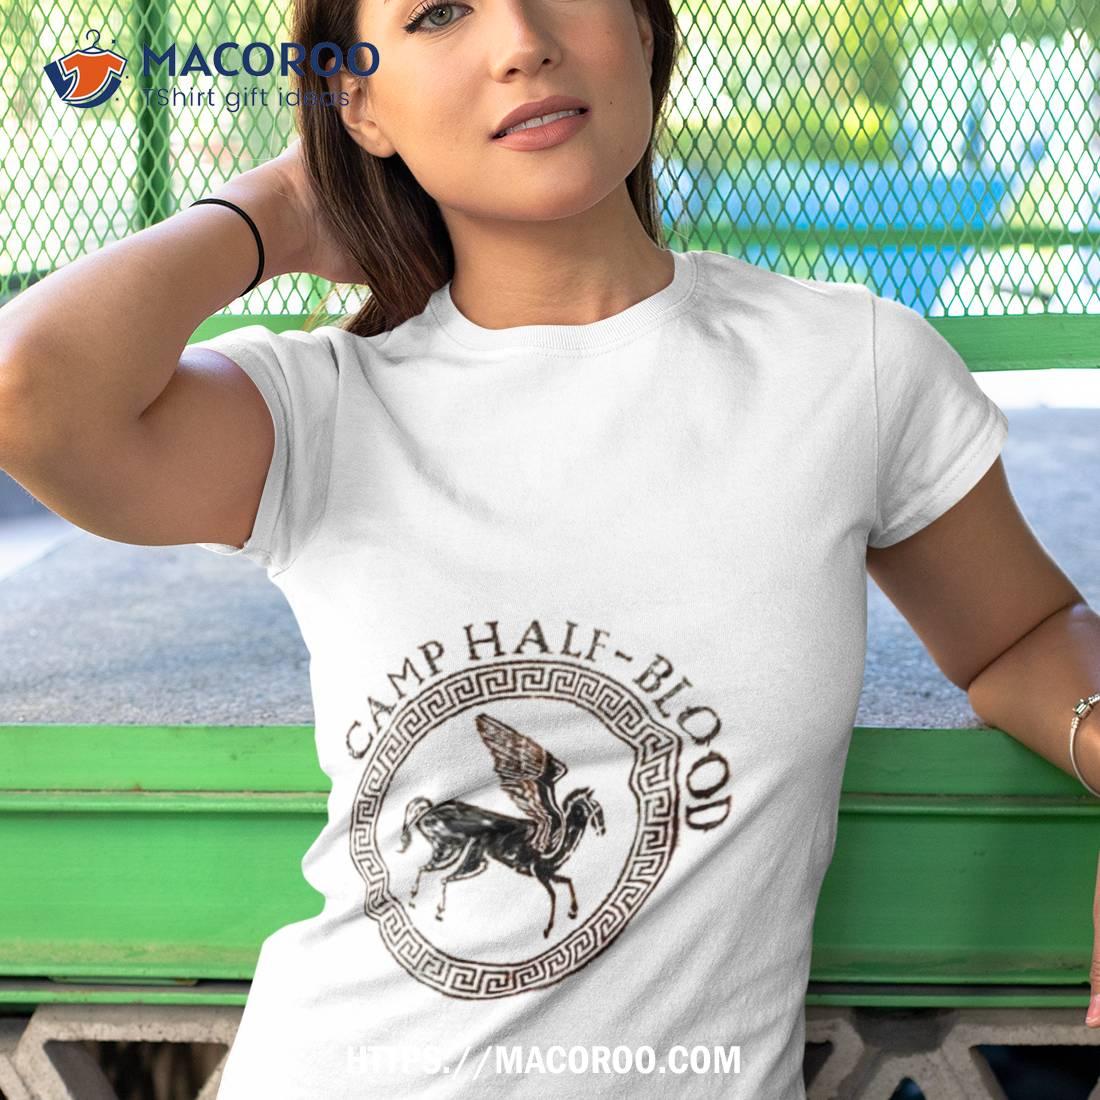 Camp half-blood - percy jackson t-shirt